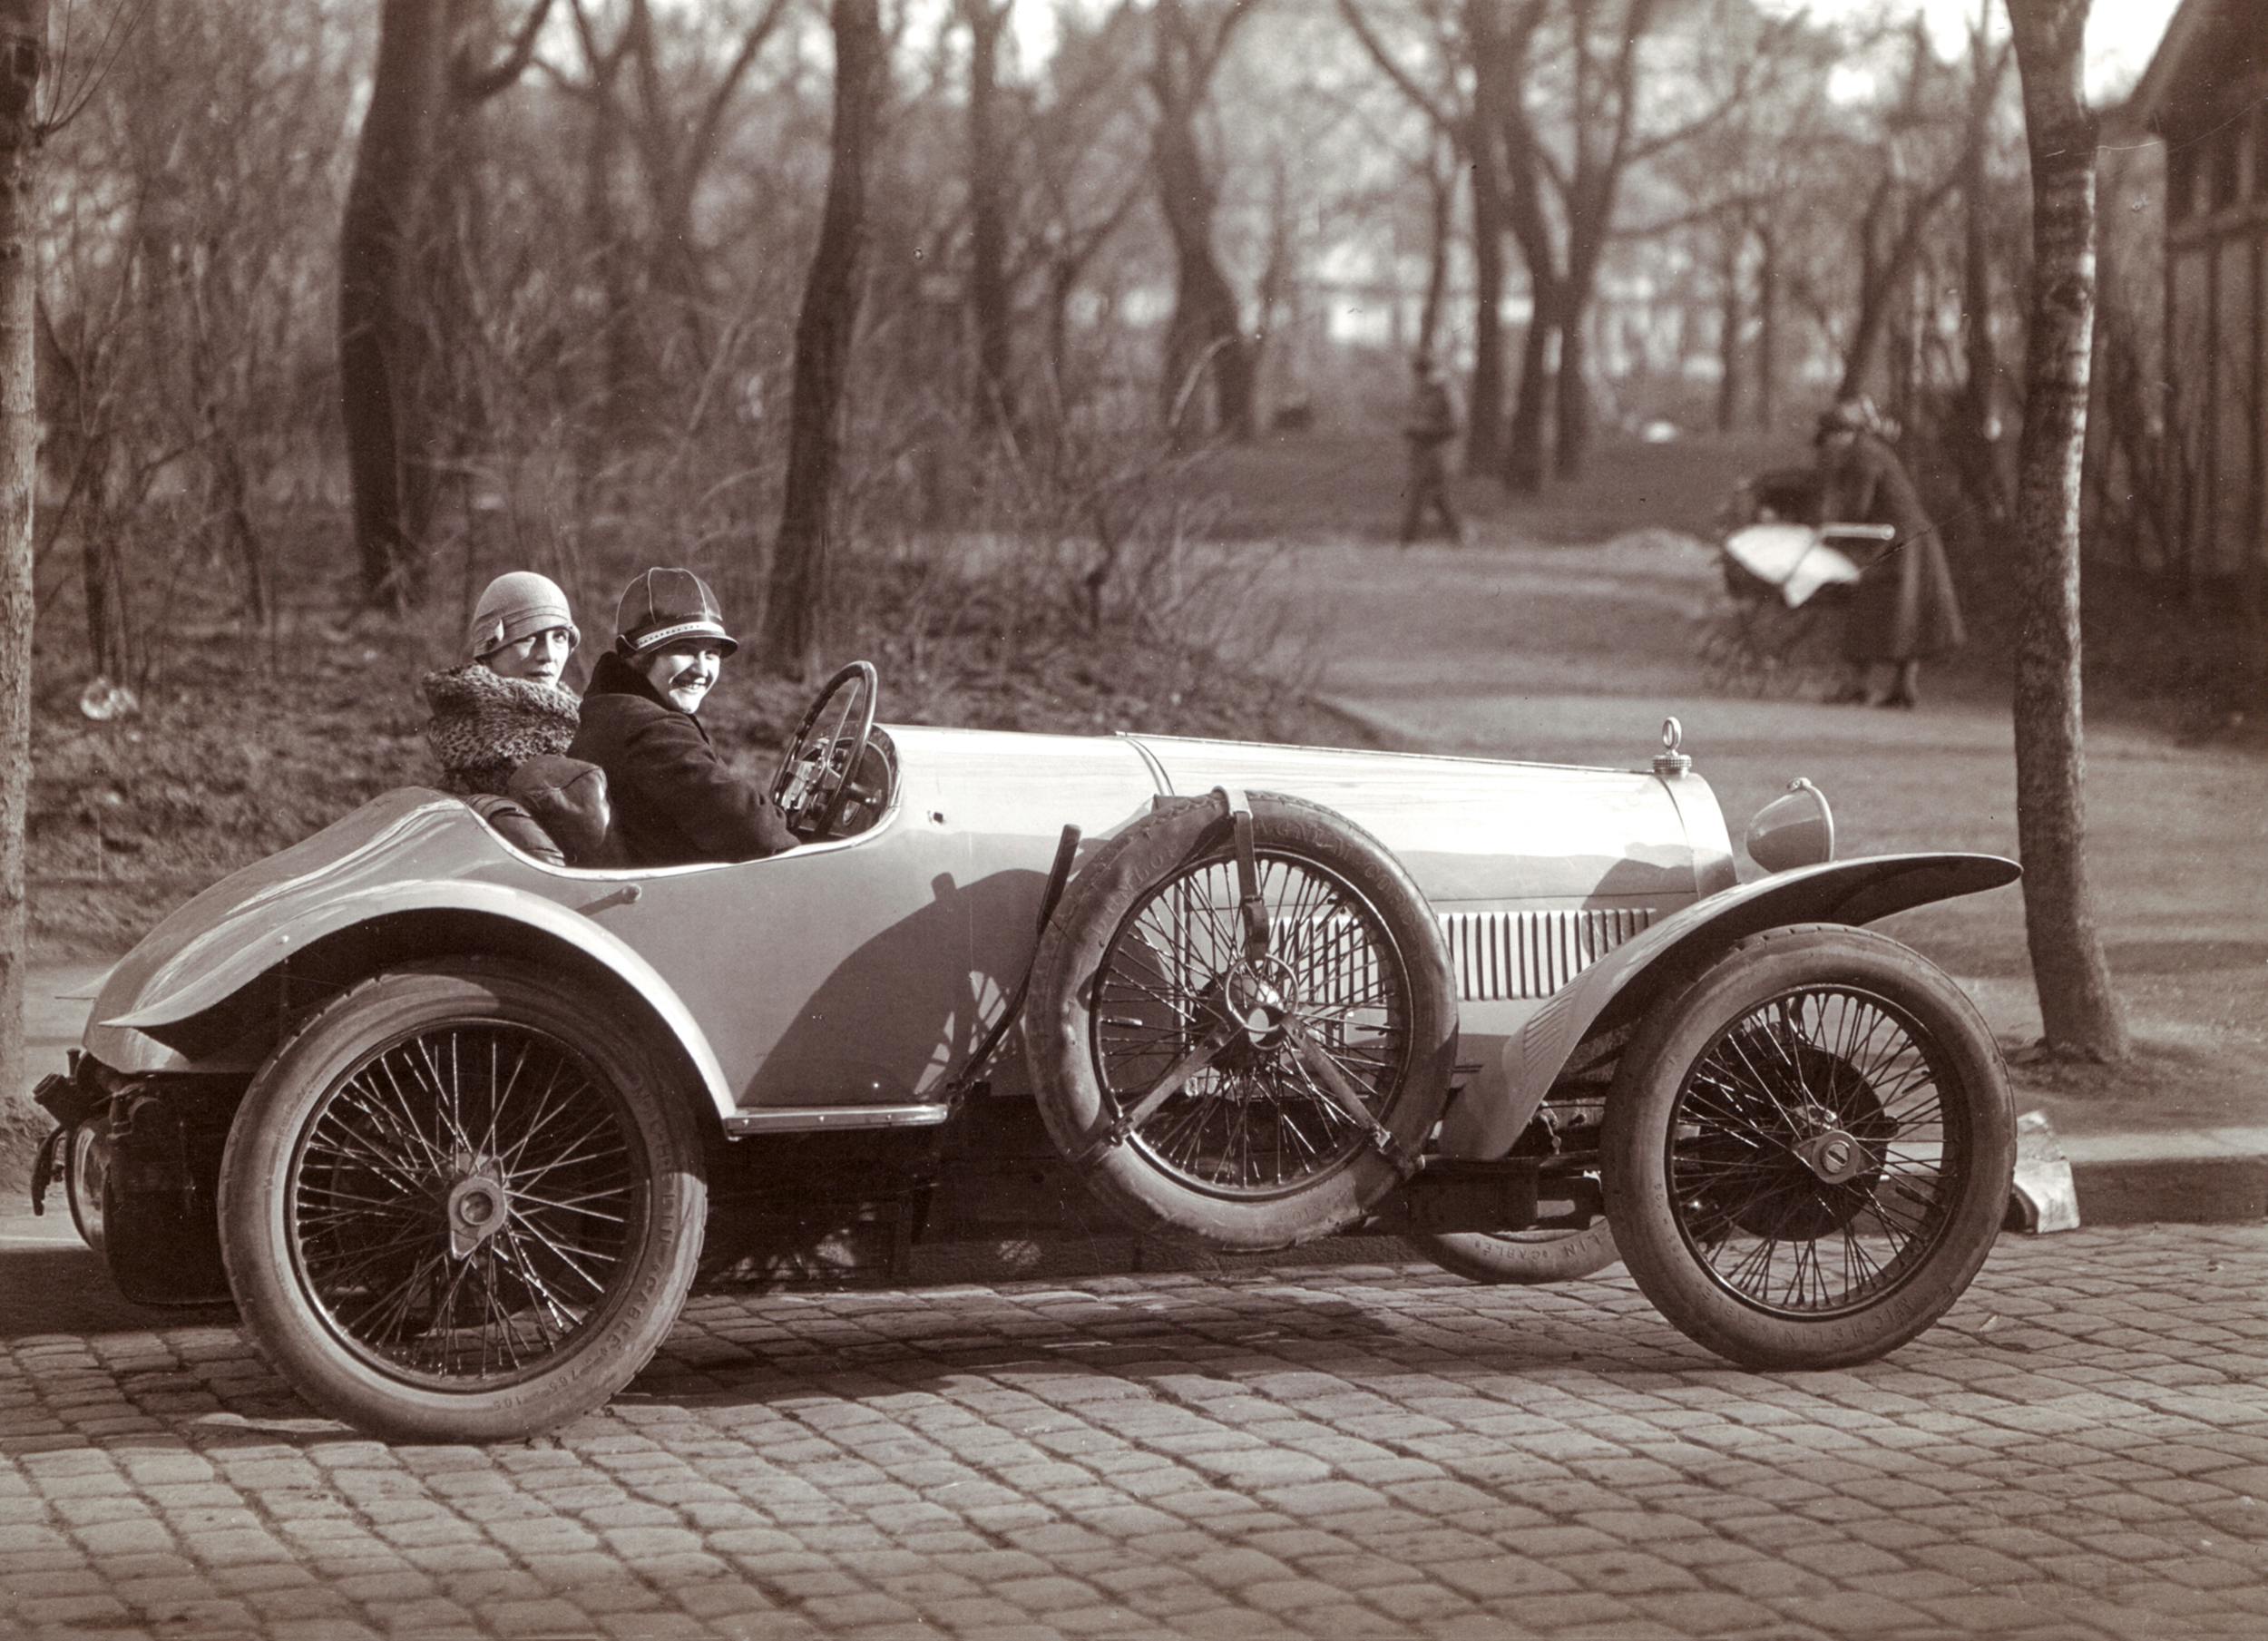 Bugatti Type 30